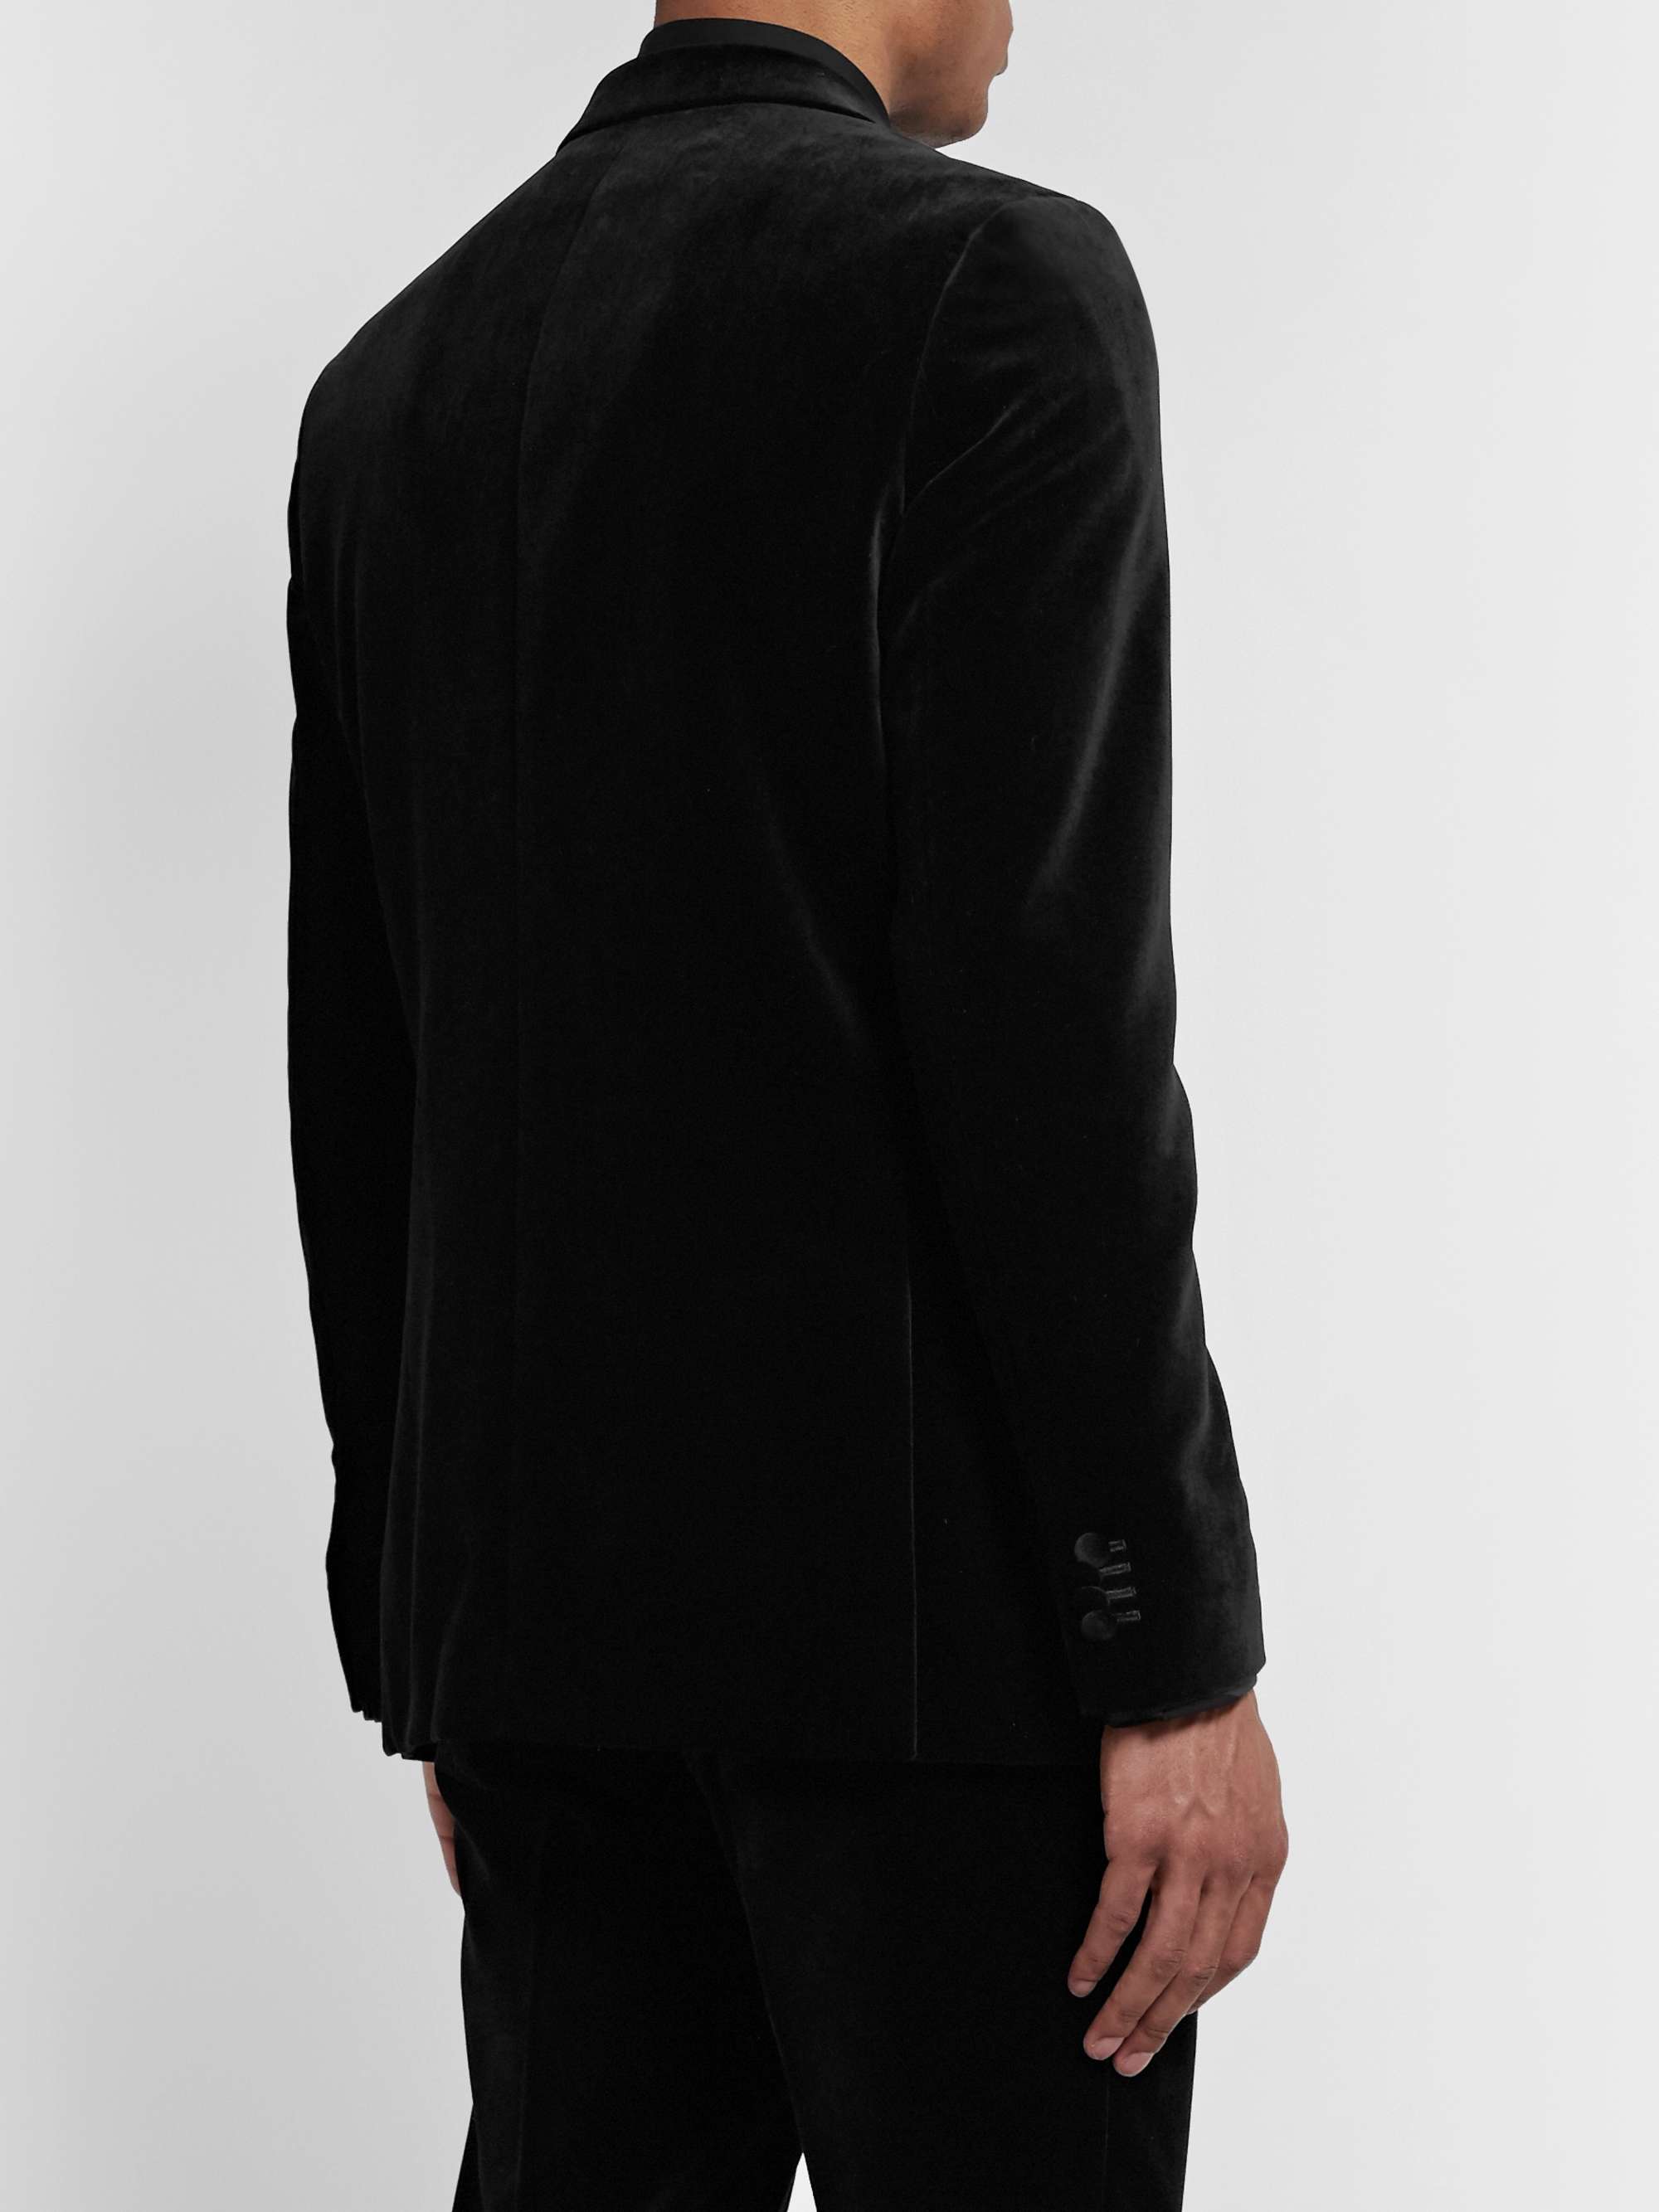 THE ROW Black Waris Slim-Fit Velvet Suit Jacket for Men | MR PORTER